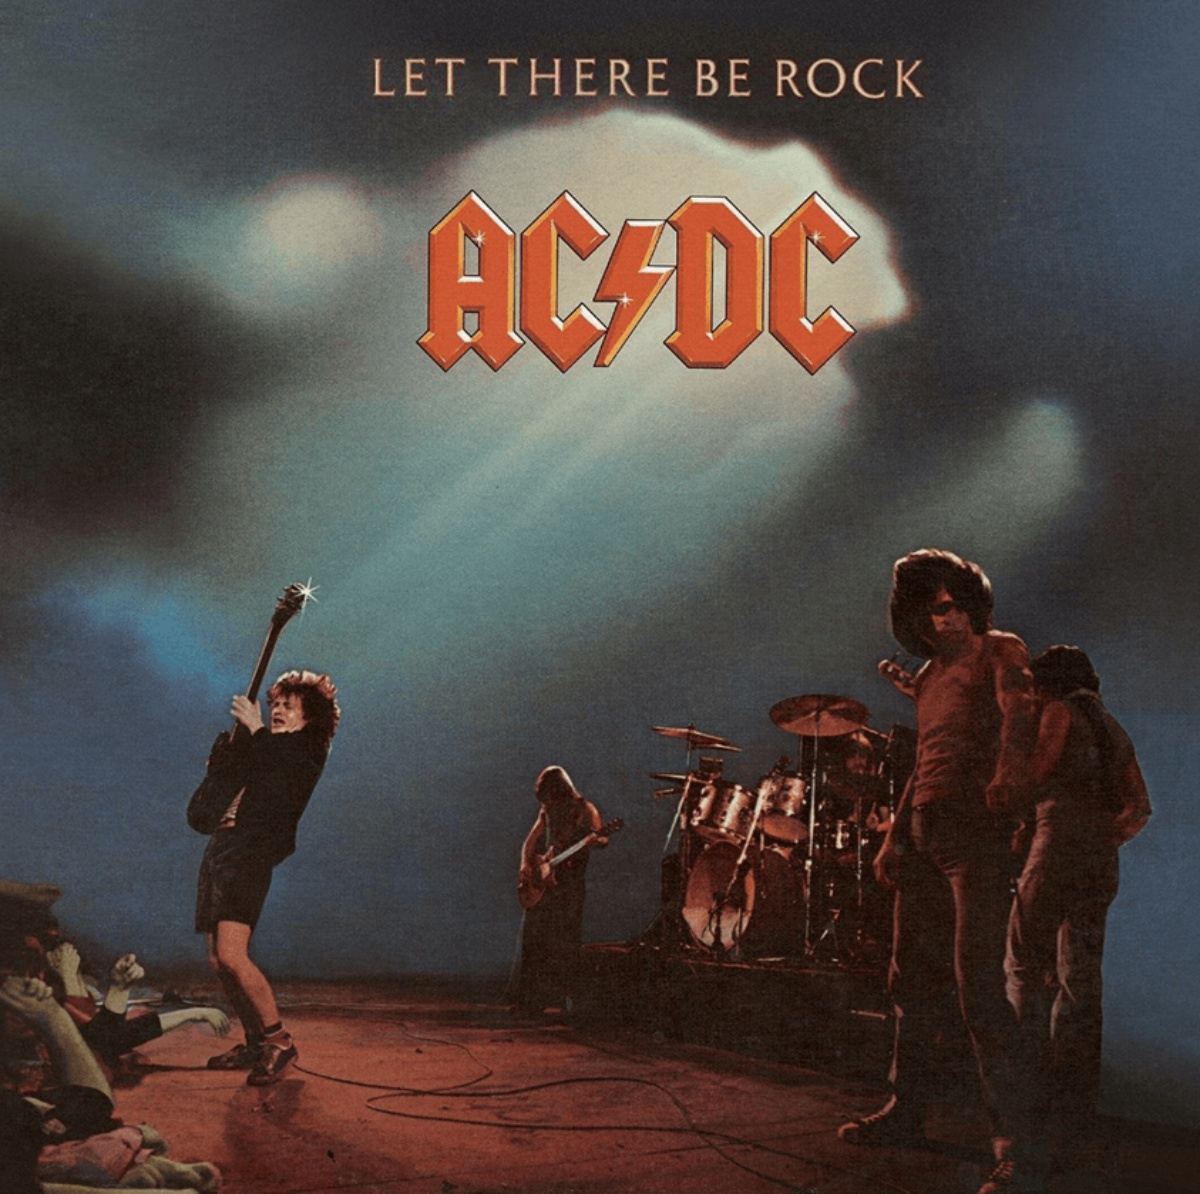 Обложка альбома «Let There Be Rock» группы AC/DC